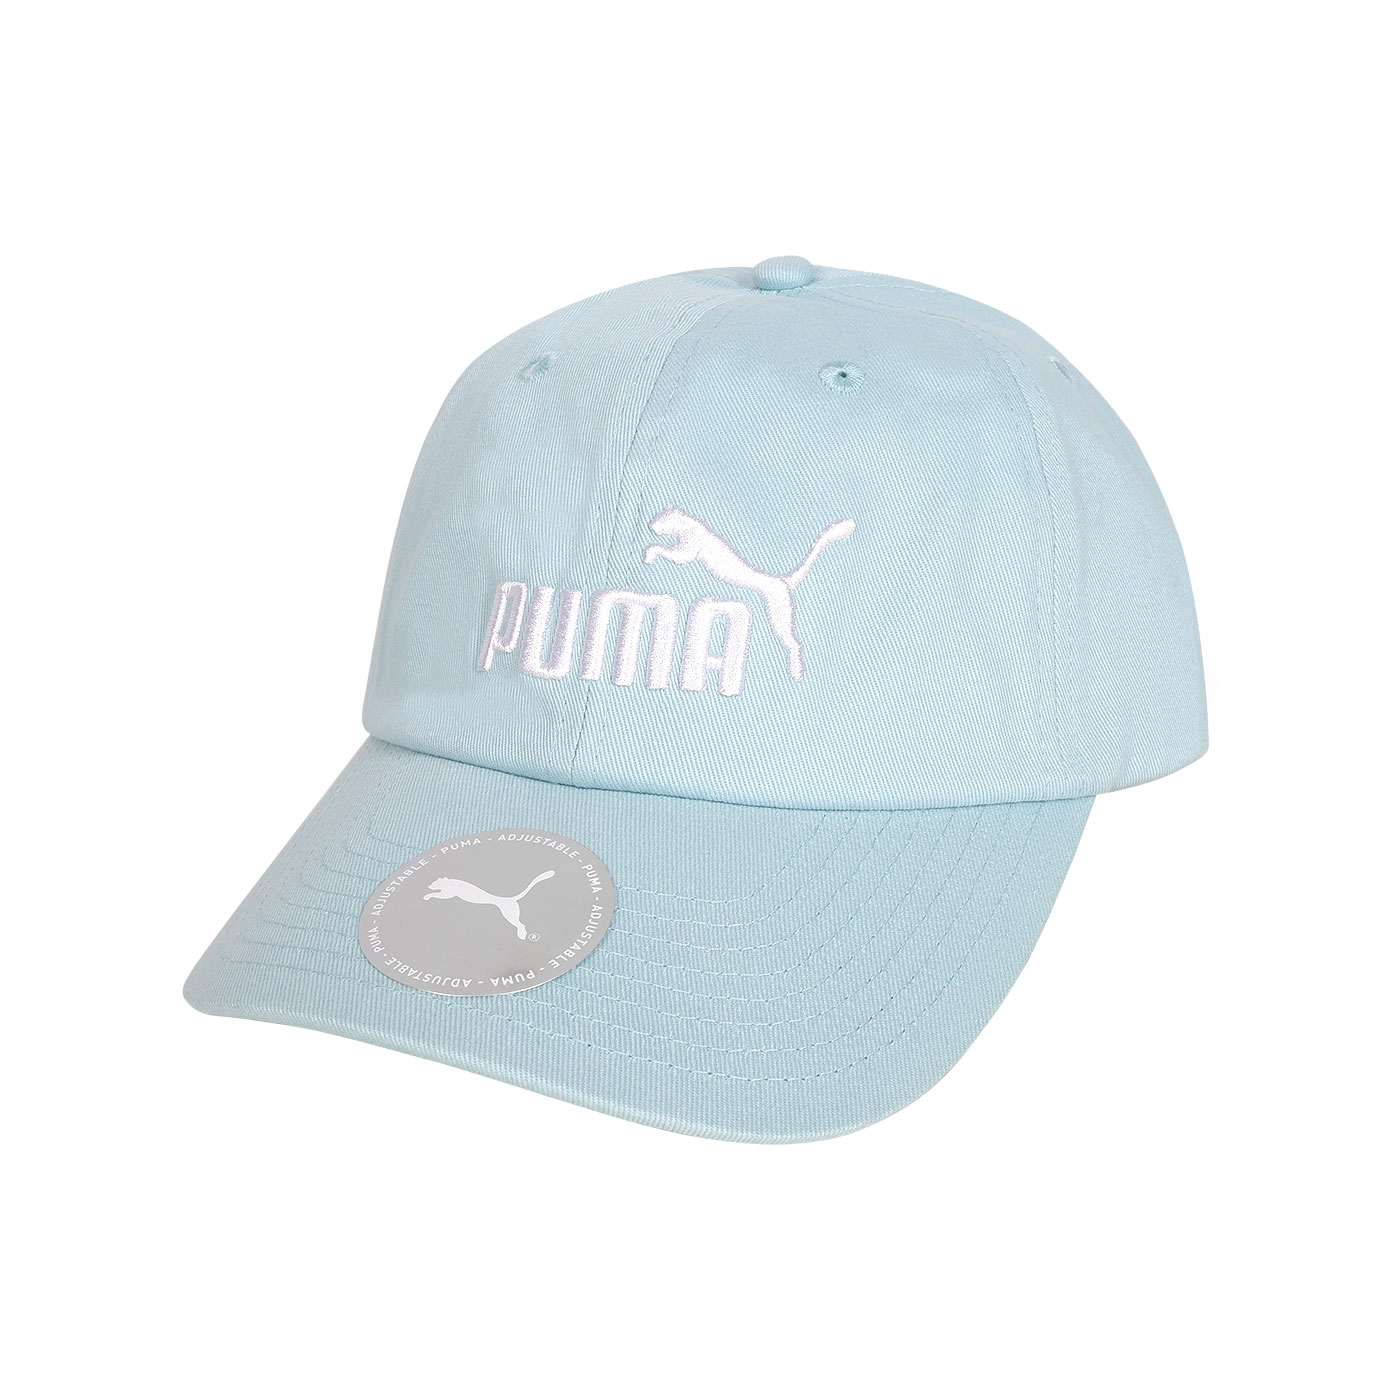 PUMA 基本系列 No.1 棒球帽  02435714 - 馬卡龍綠白